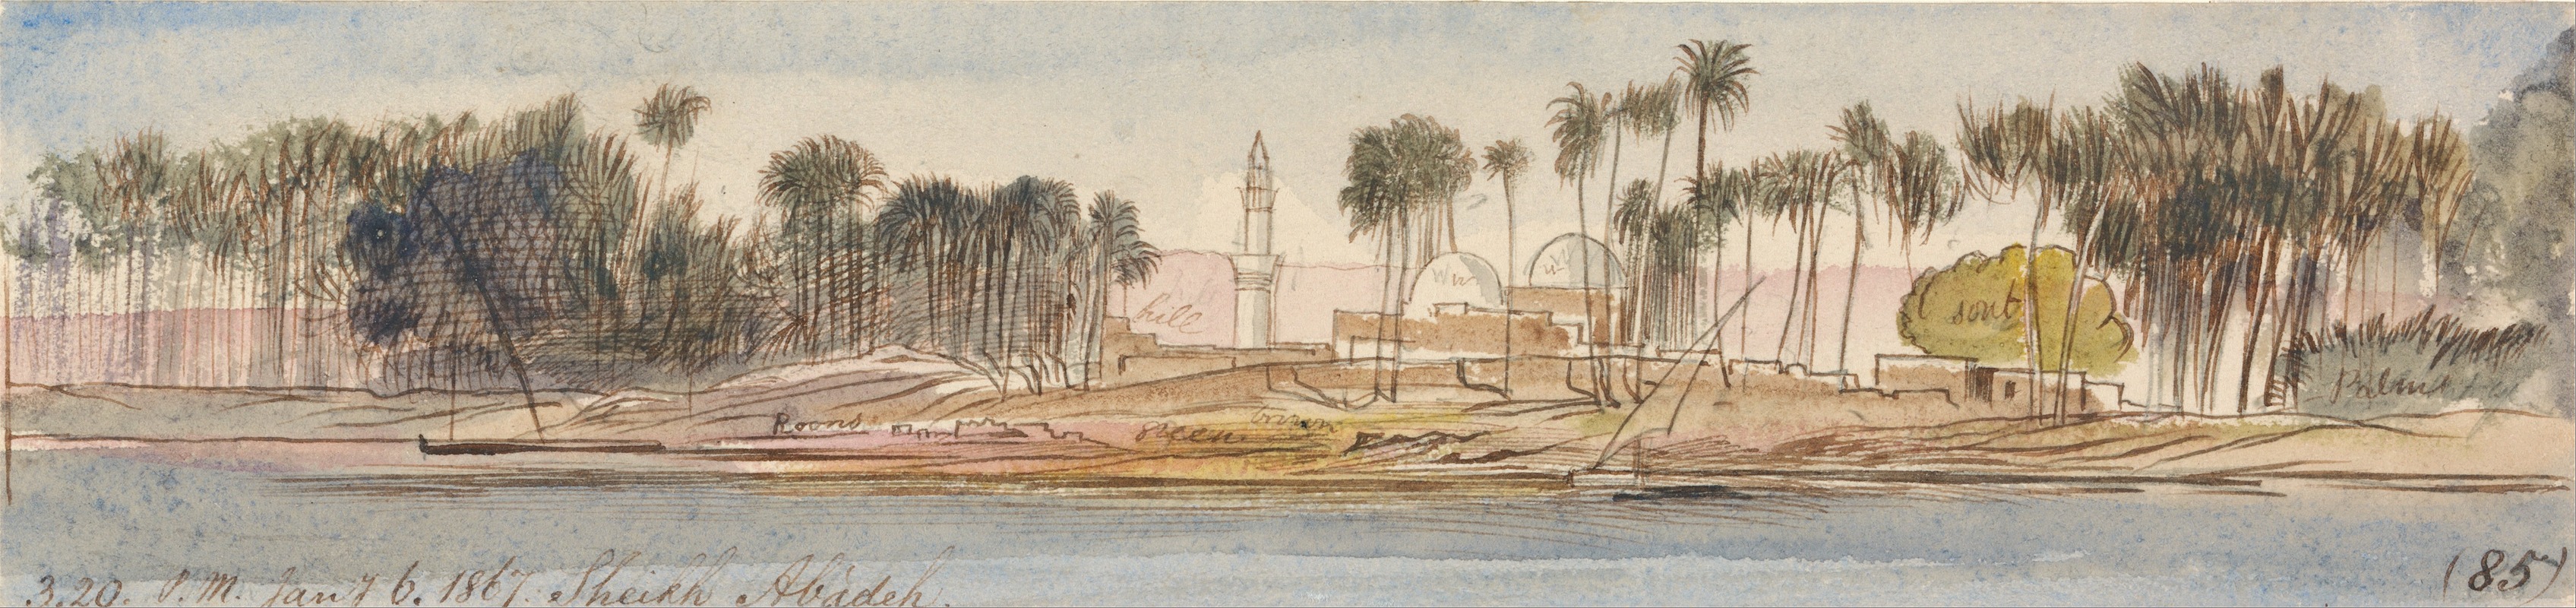 Edward Lear - Sheikh Abadeh, 3-20 pm, 6 January 1867